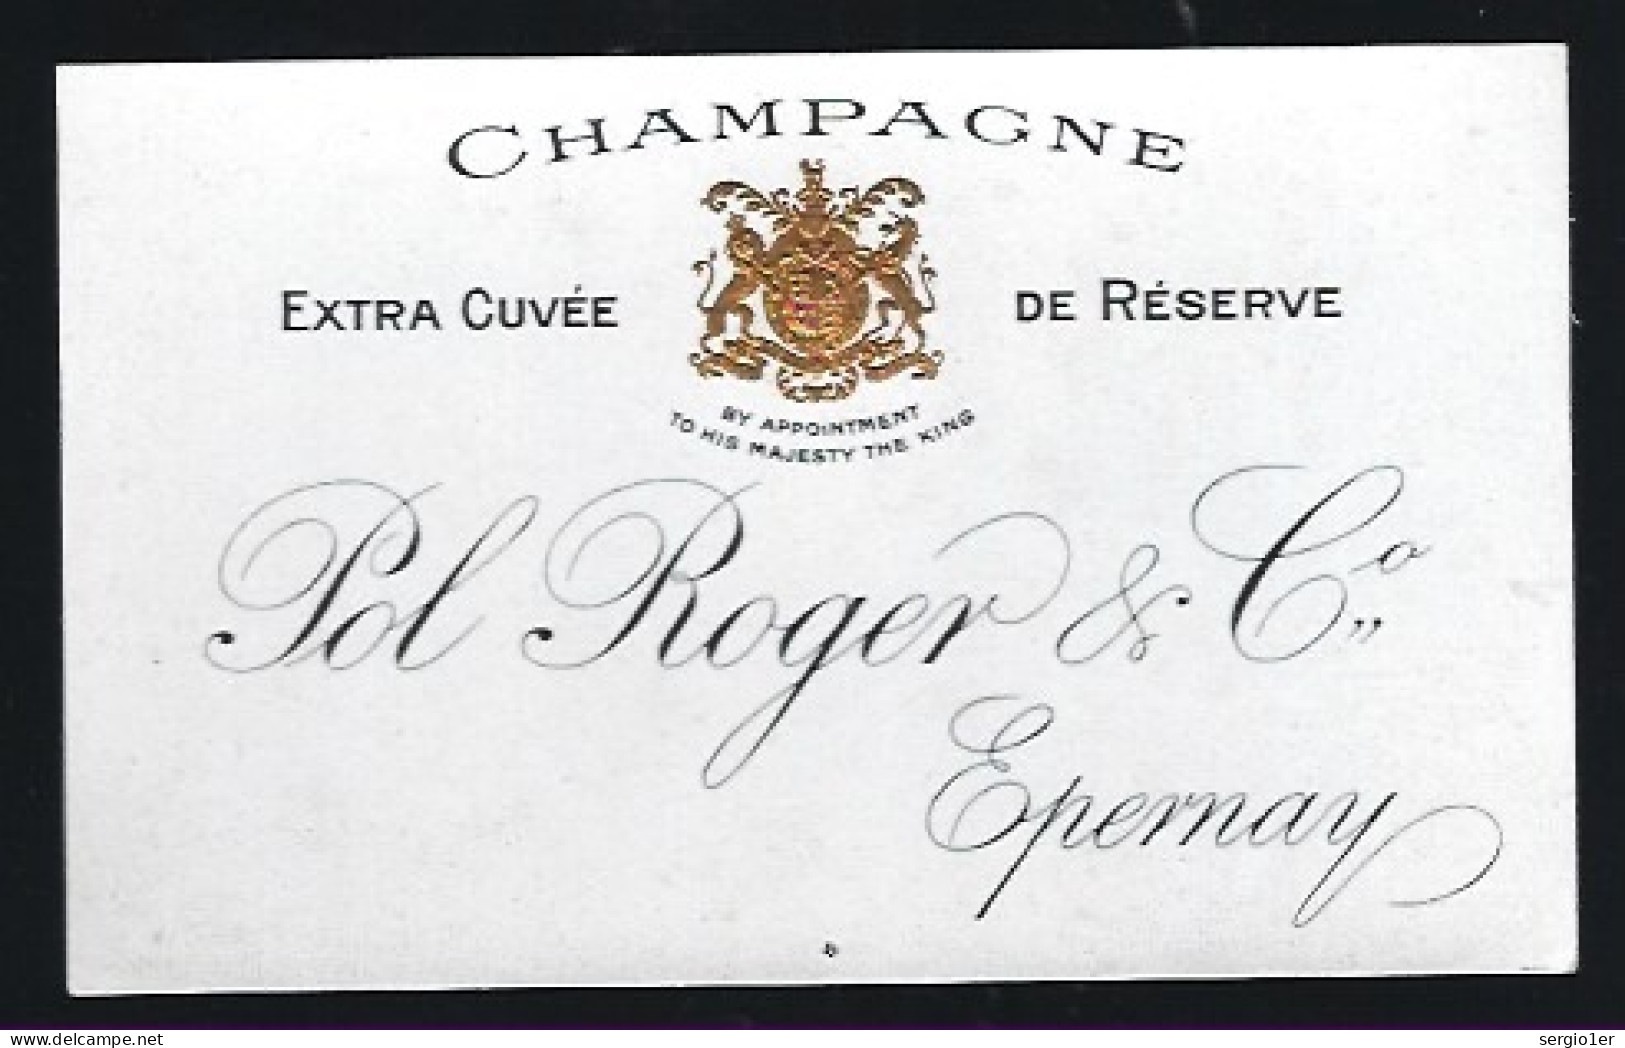 Etiquette Champagne Extra Cuvée De Réserve Pol Roger & Cie Epernay  Marne 51 Version 2 - Champagner